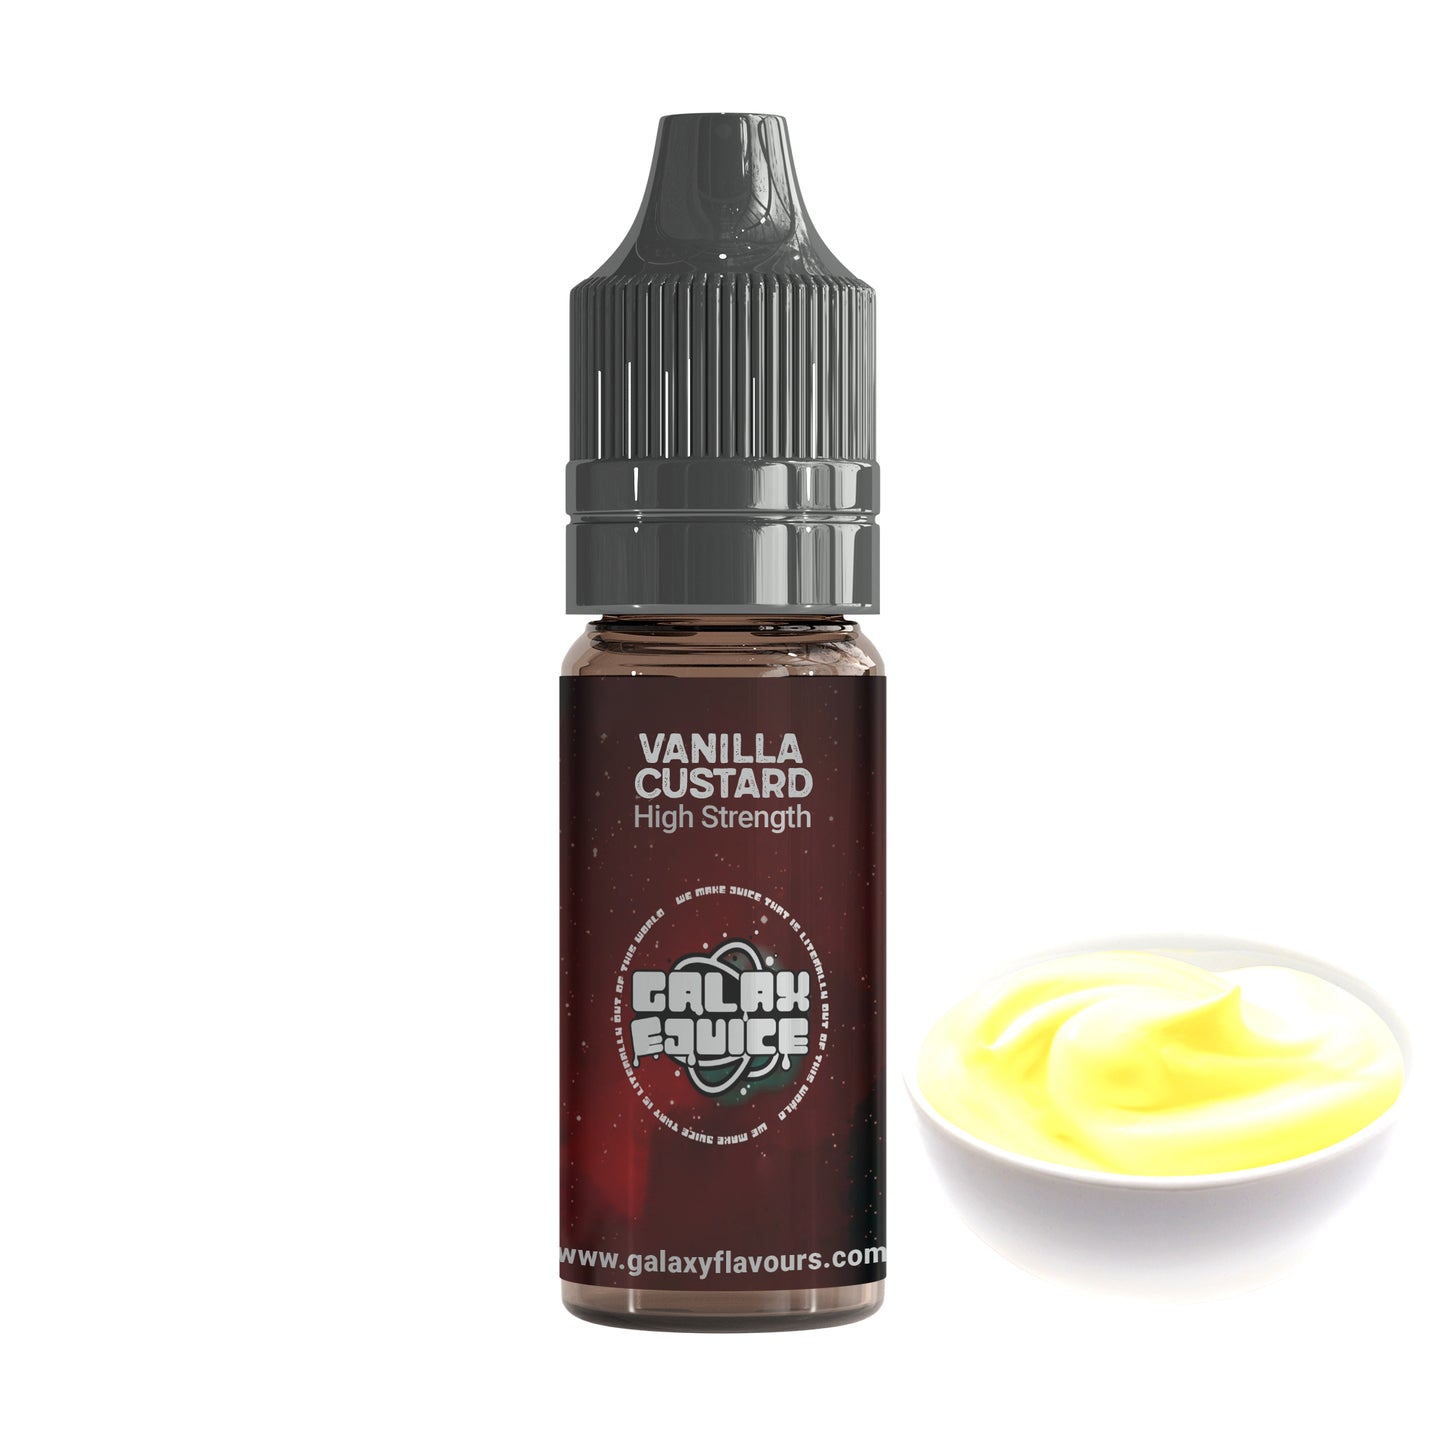 Vanilla Custard High Strength Professional Flavouring.